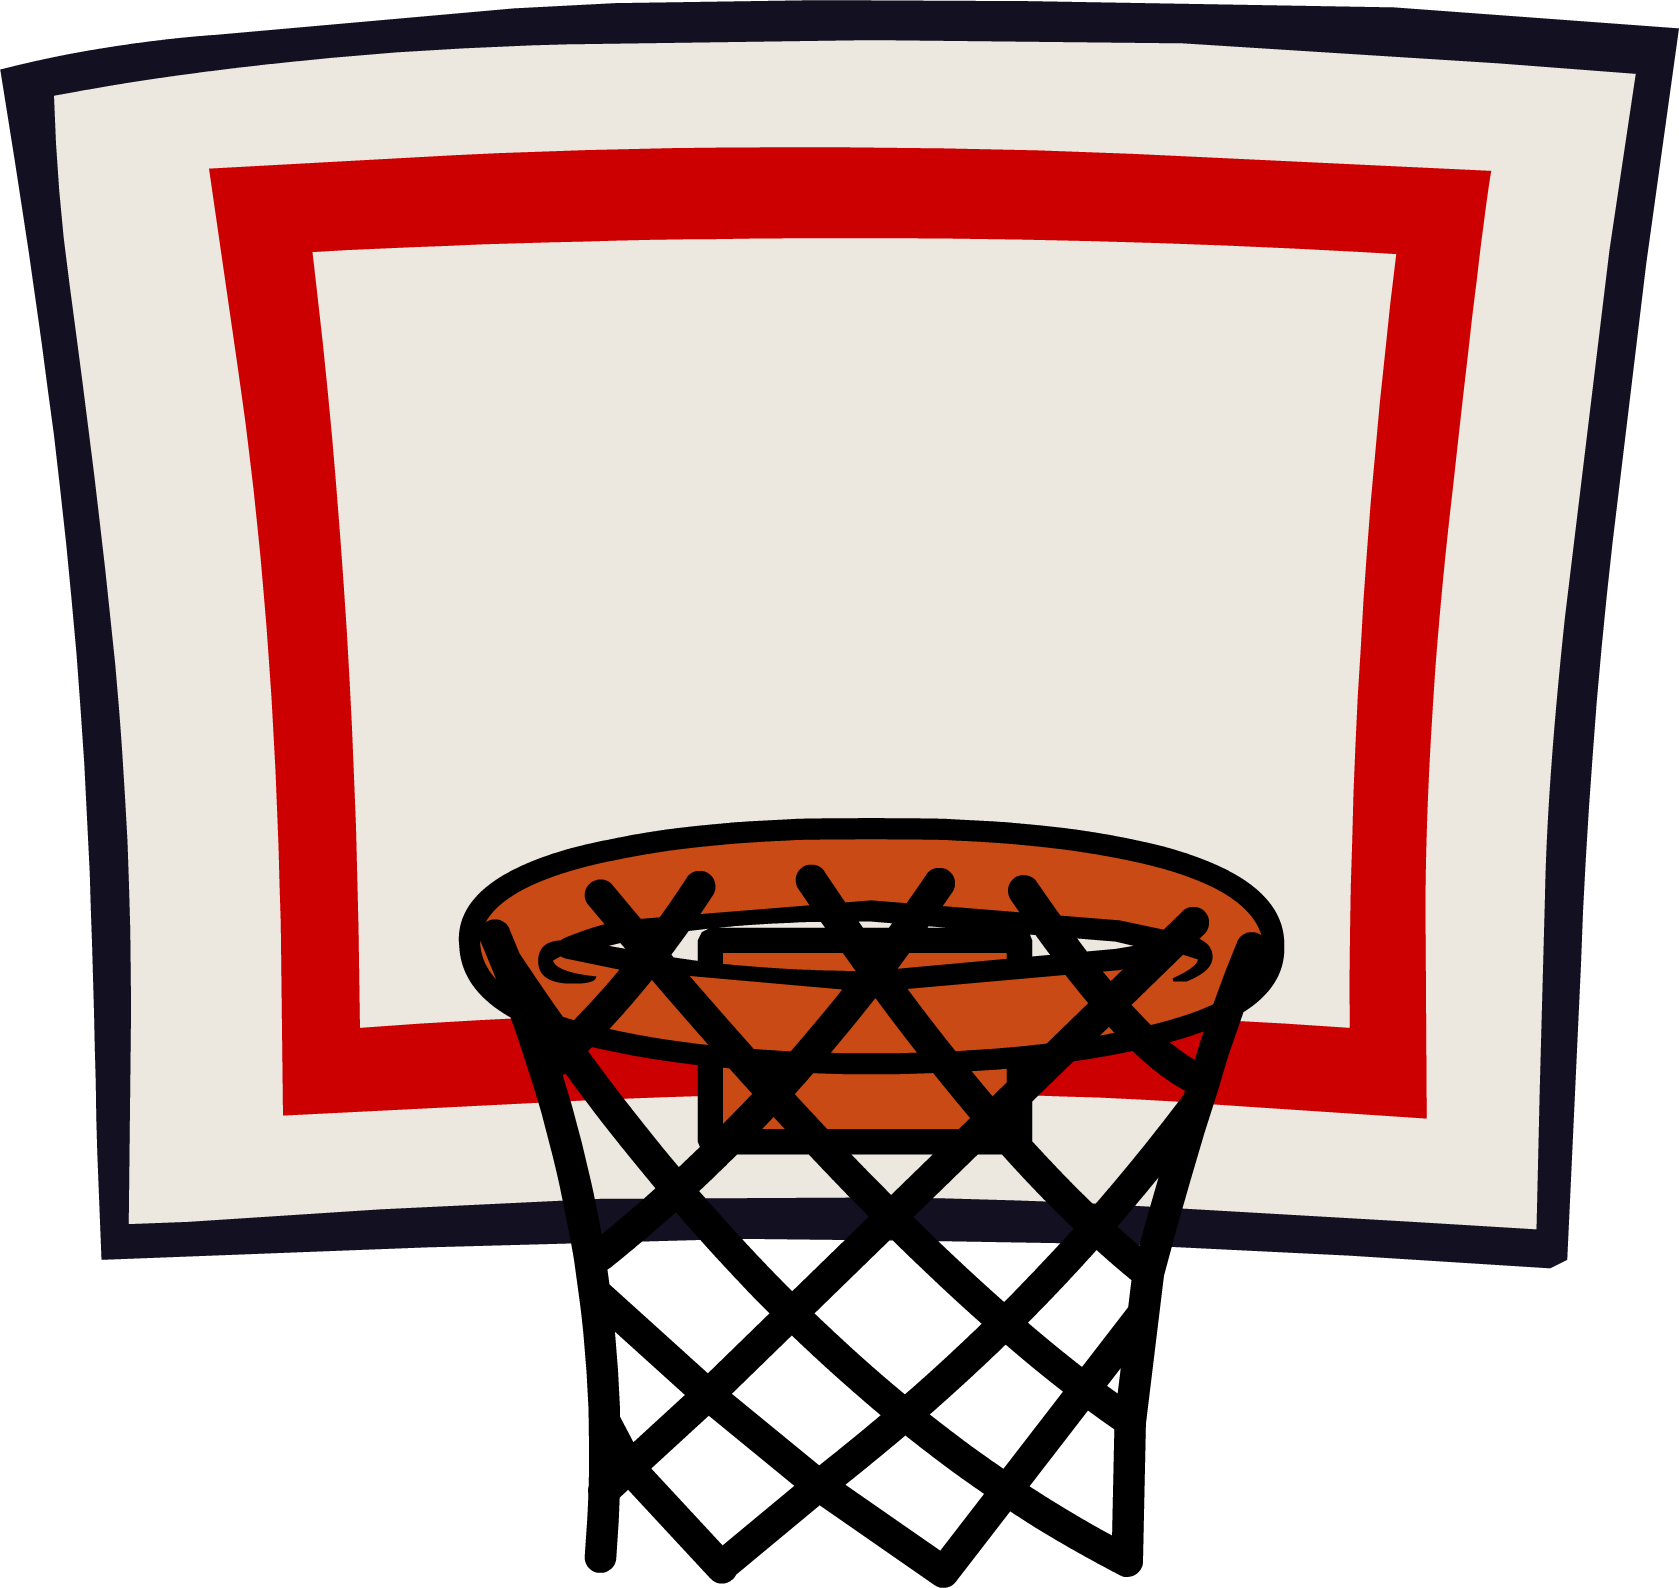 Hoop basketball ring net clipart 2